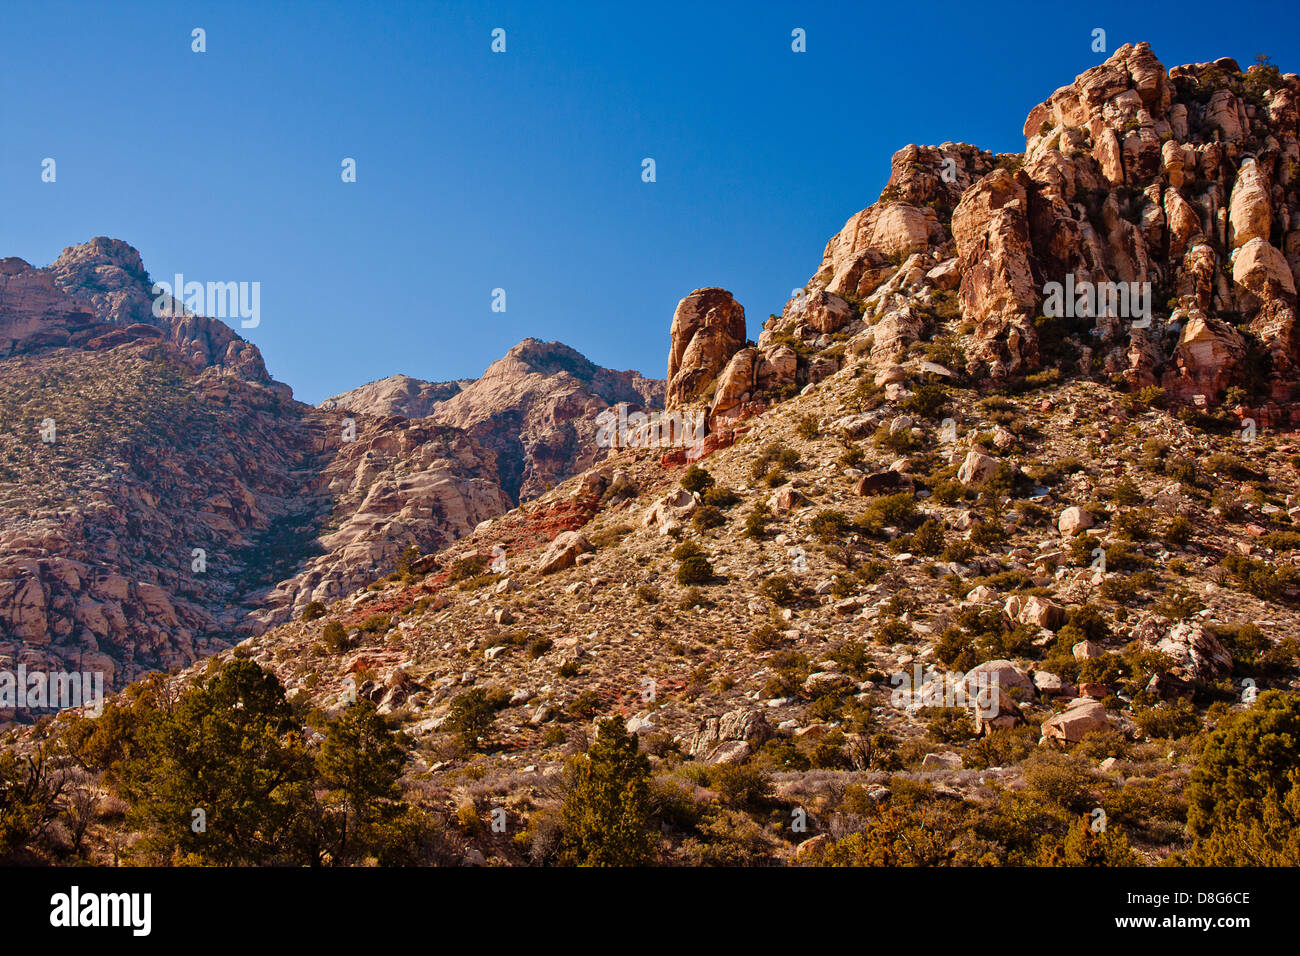 Rocky hill contre un ciel bleu vif après-midi dans la région de Red Rock Canyon, Nevada Banque D'Images